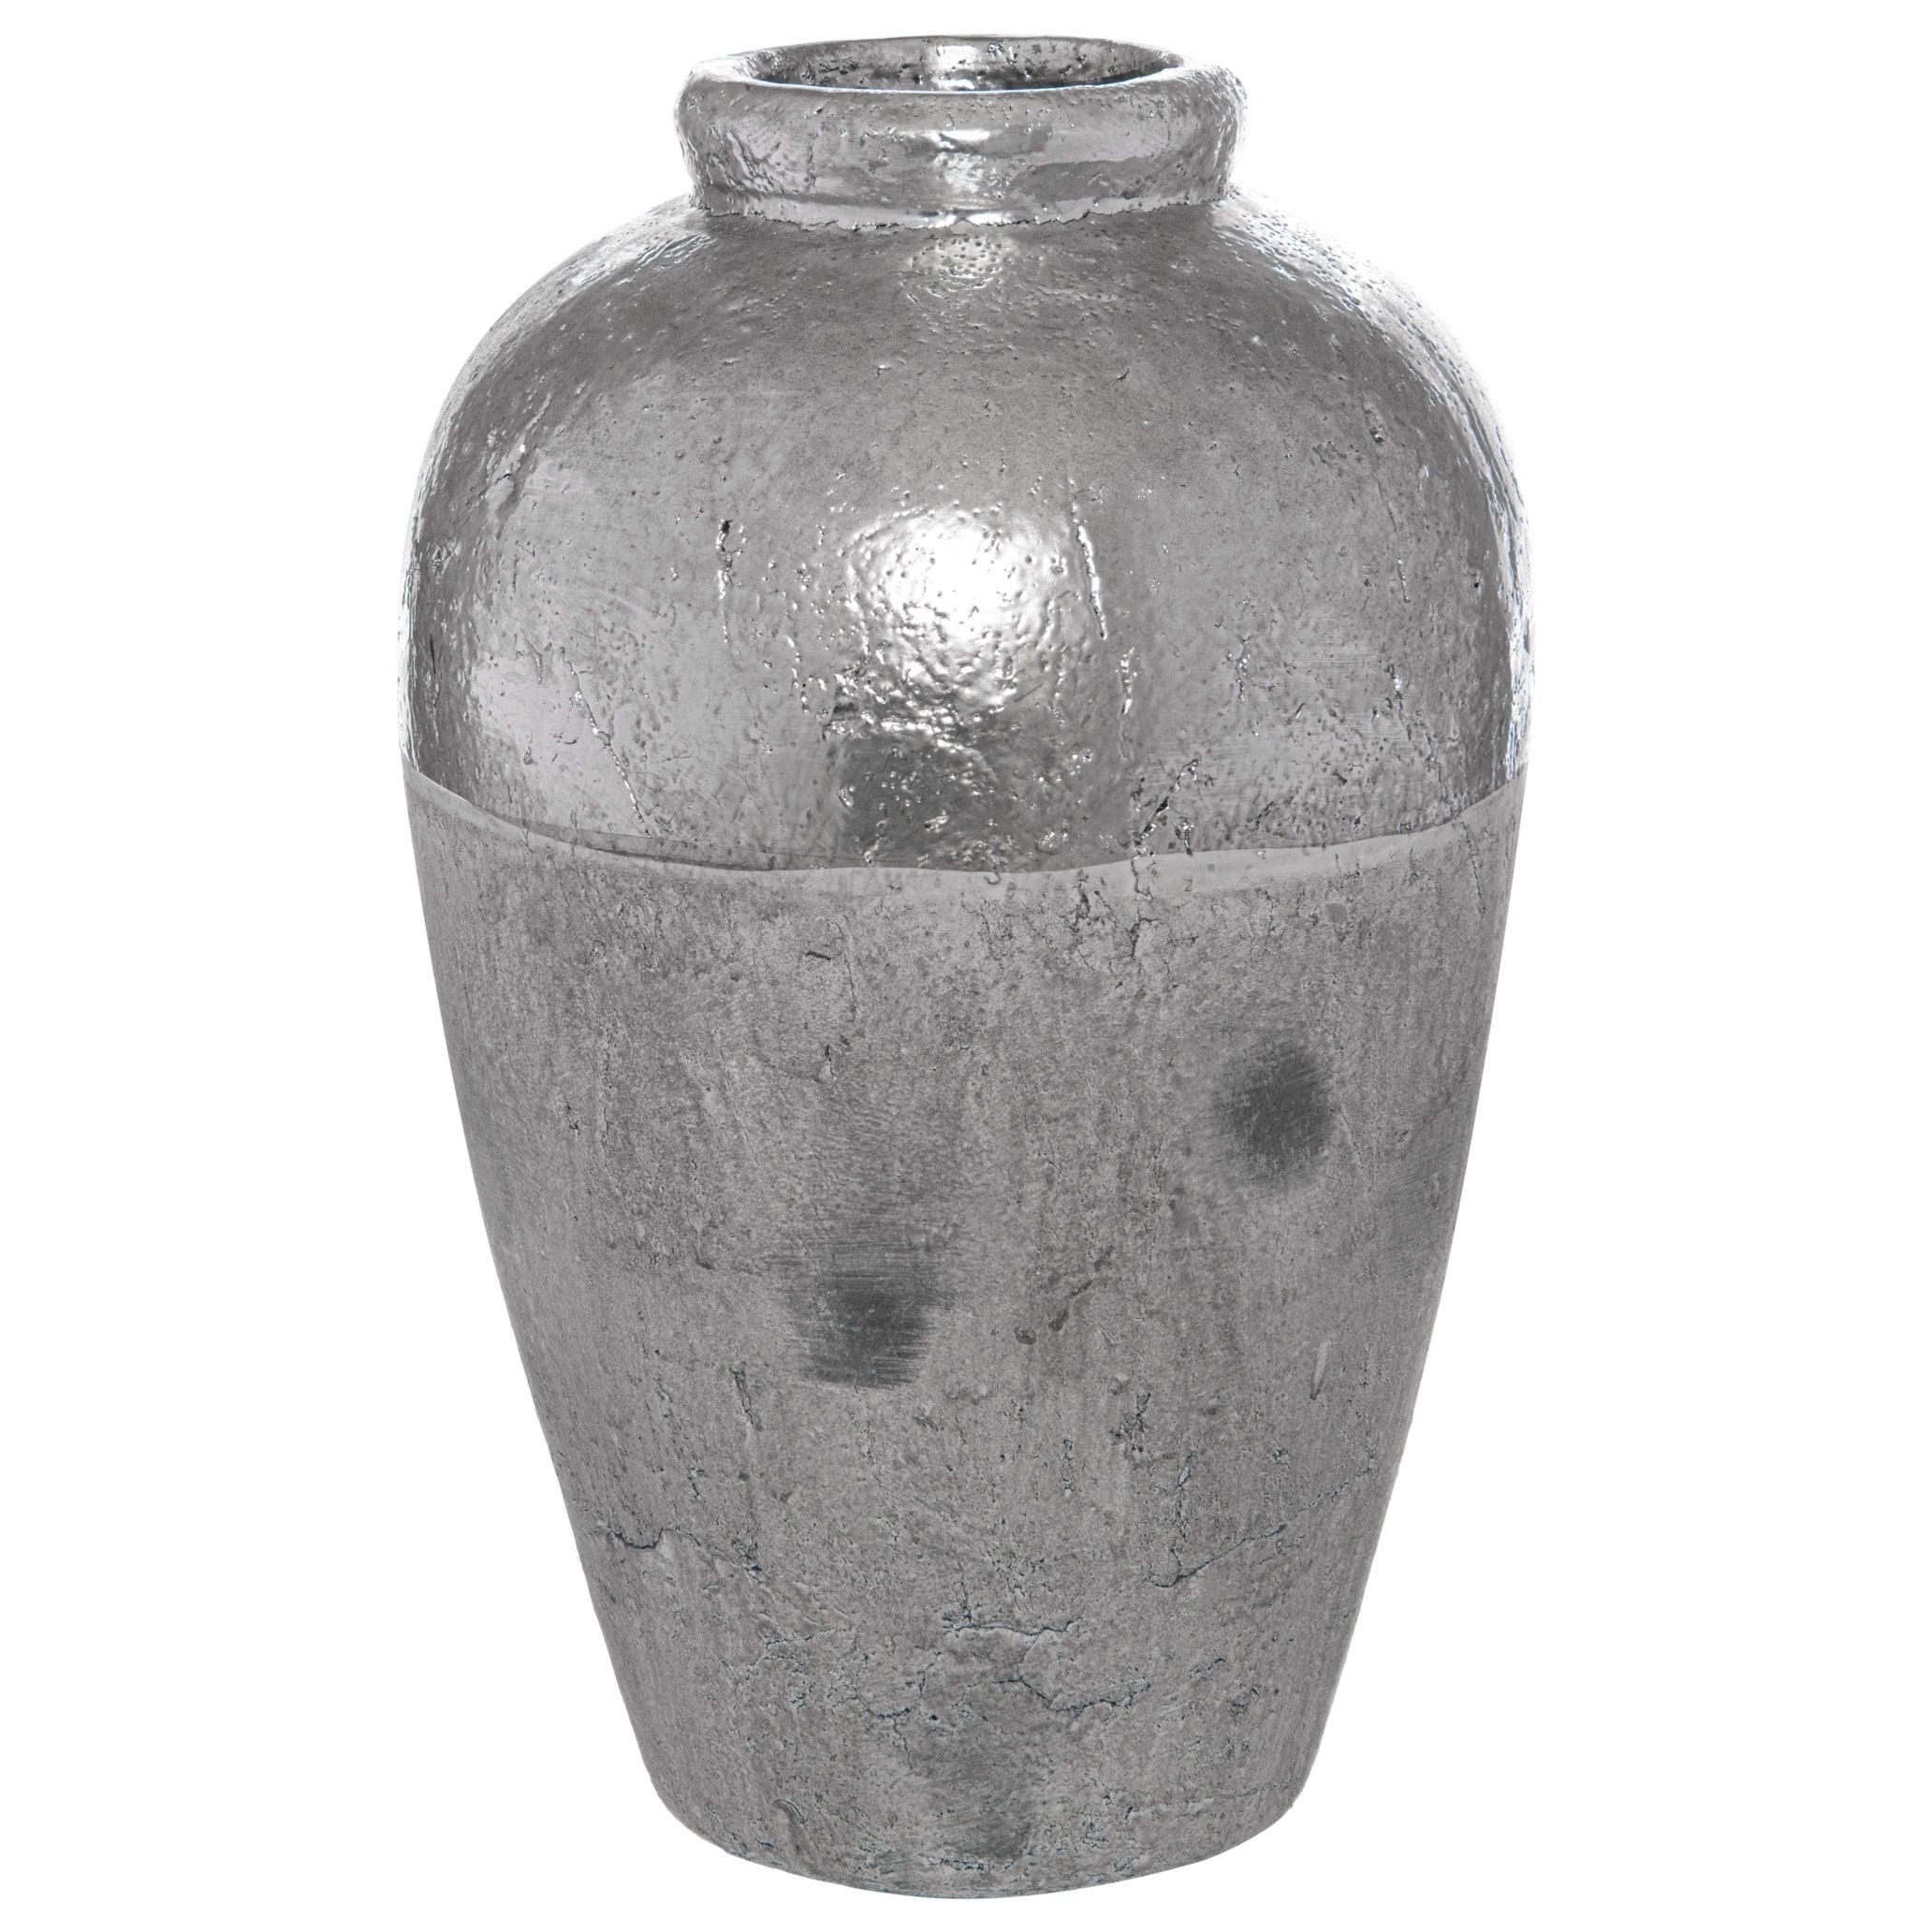 View Metallic Dipped Juniper Vase information